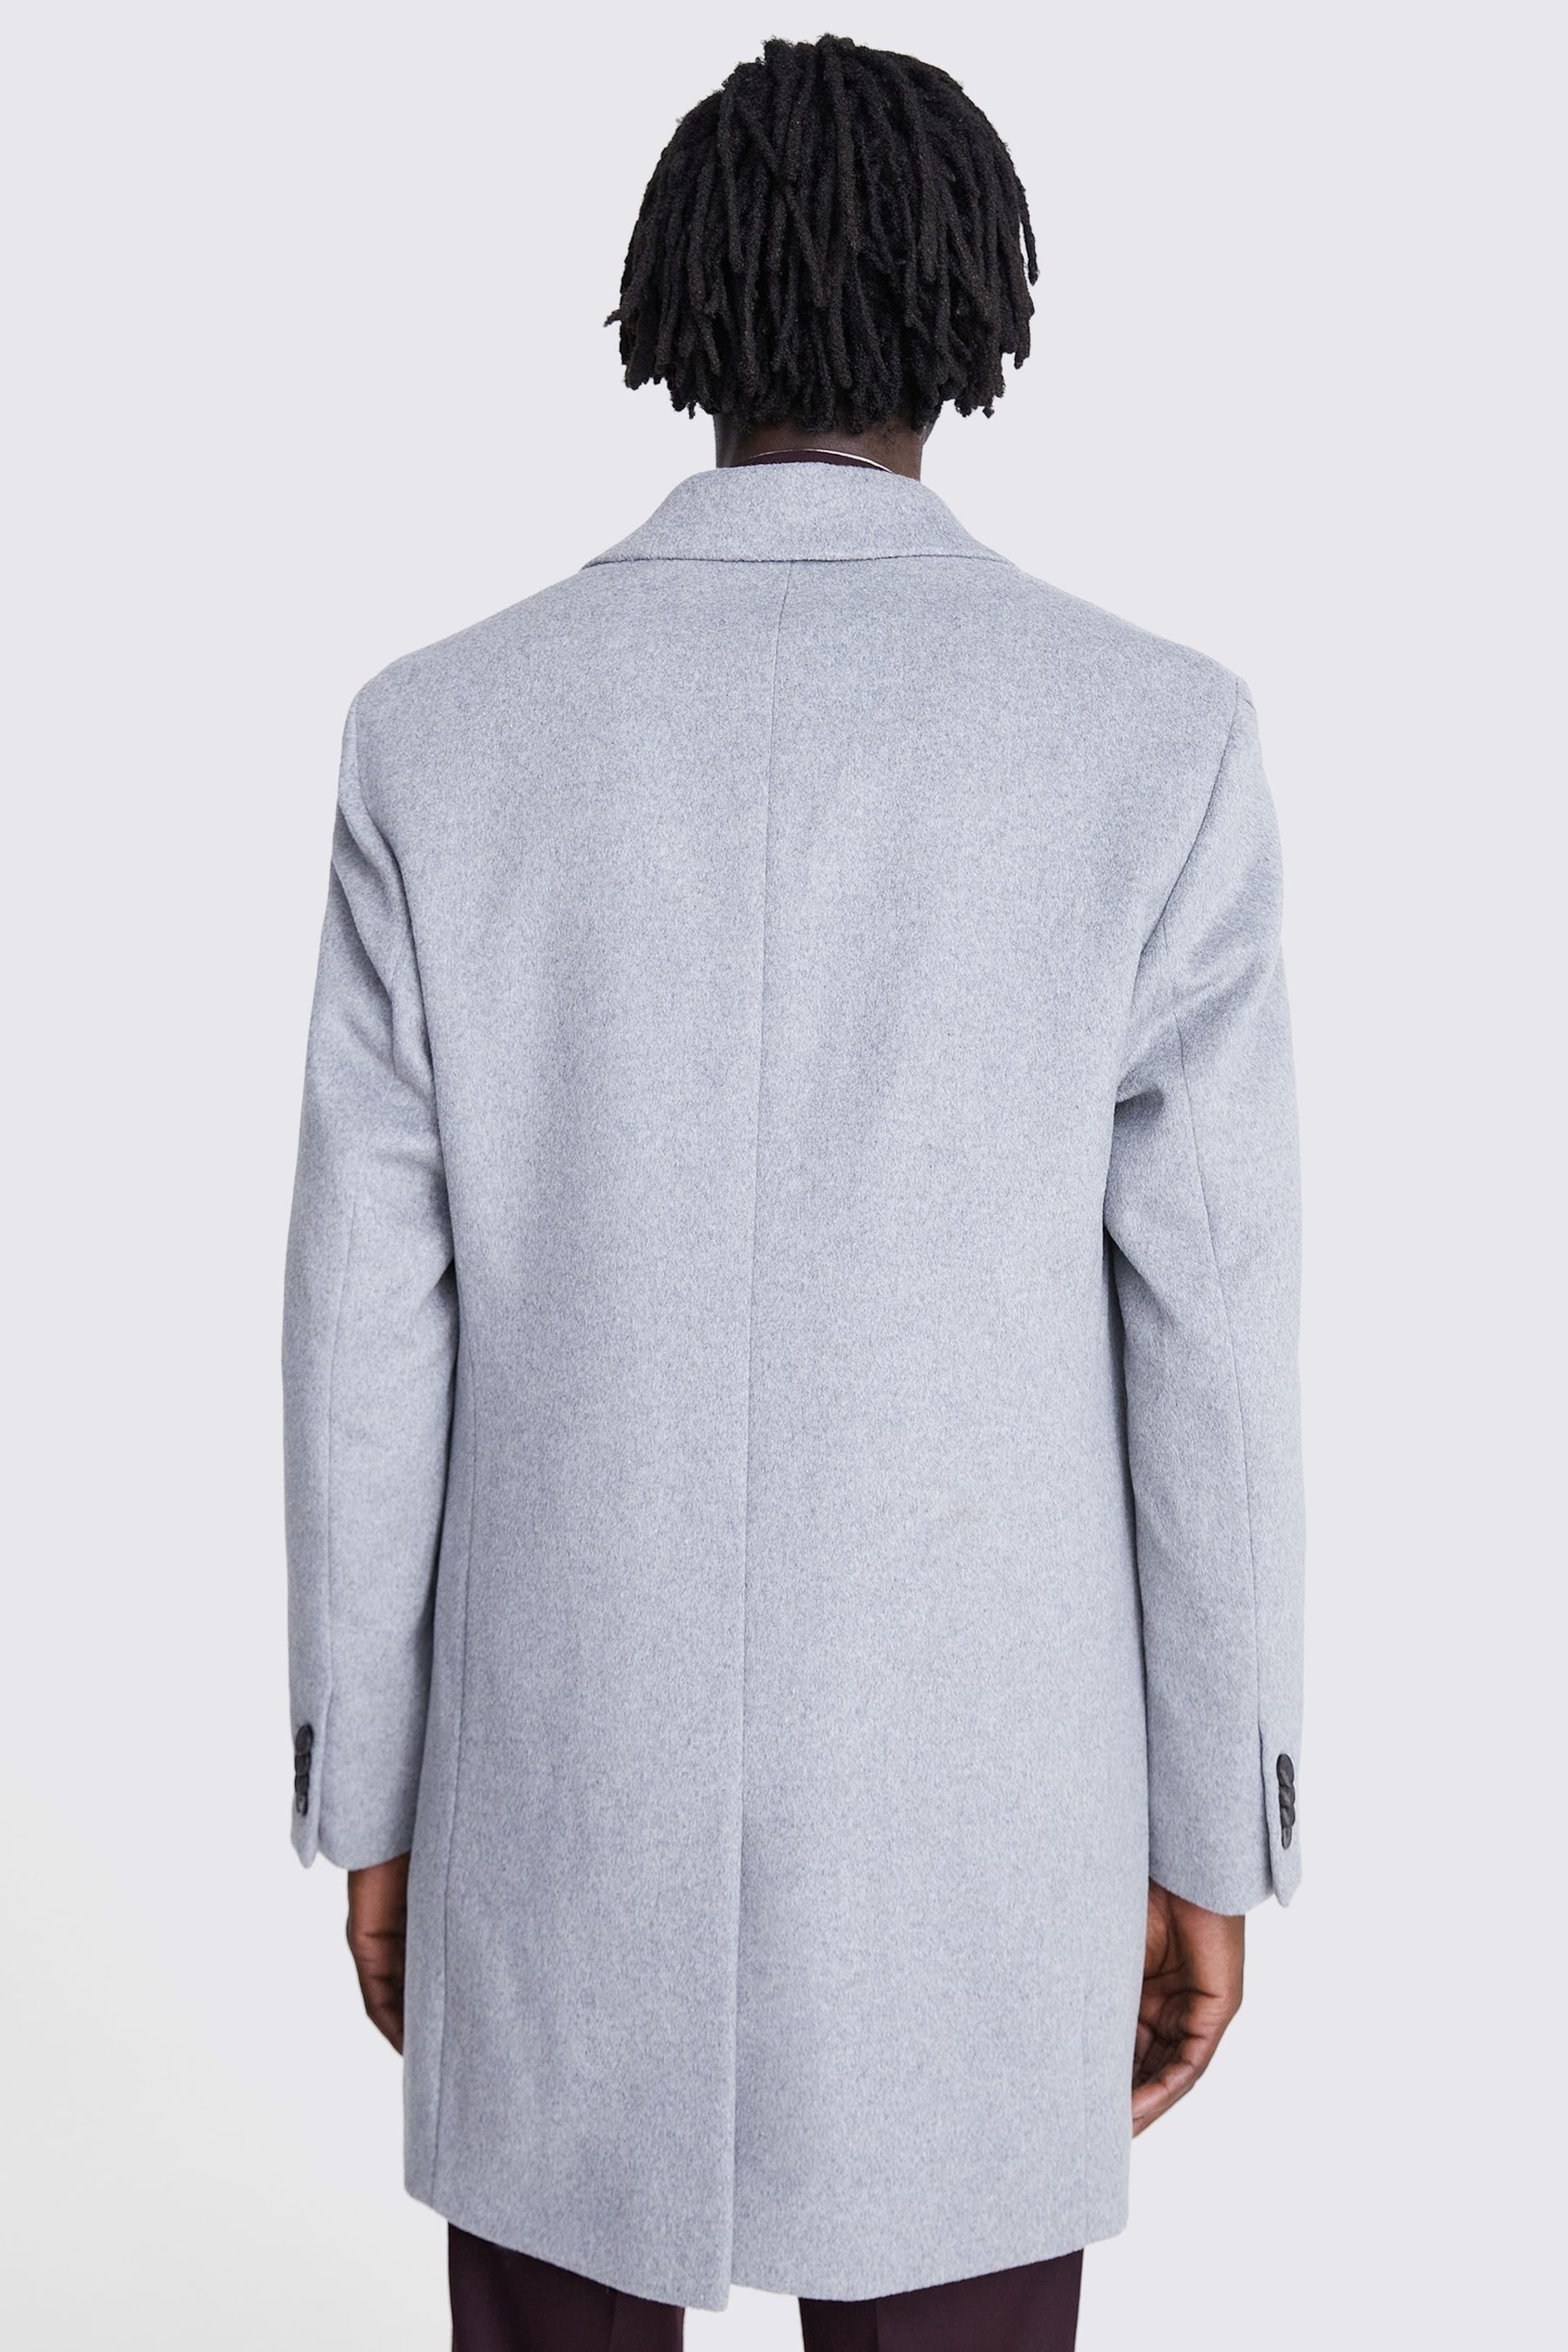 MOSS Grey Epsom Overcoat - Image 2 of 4